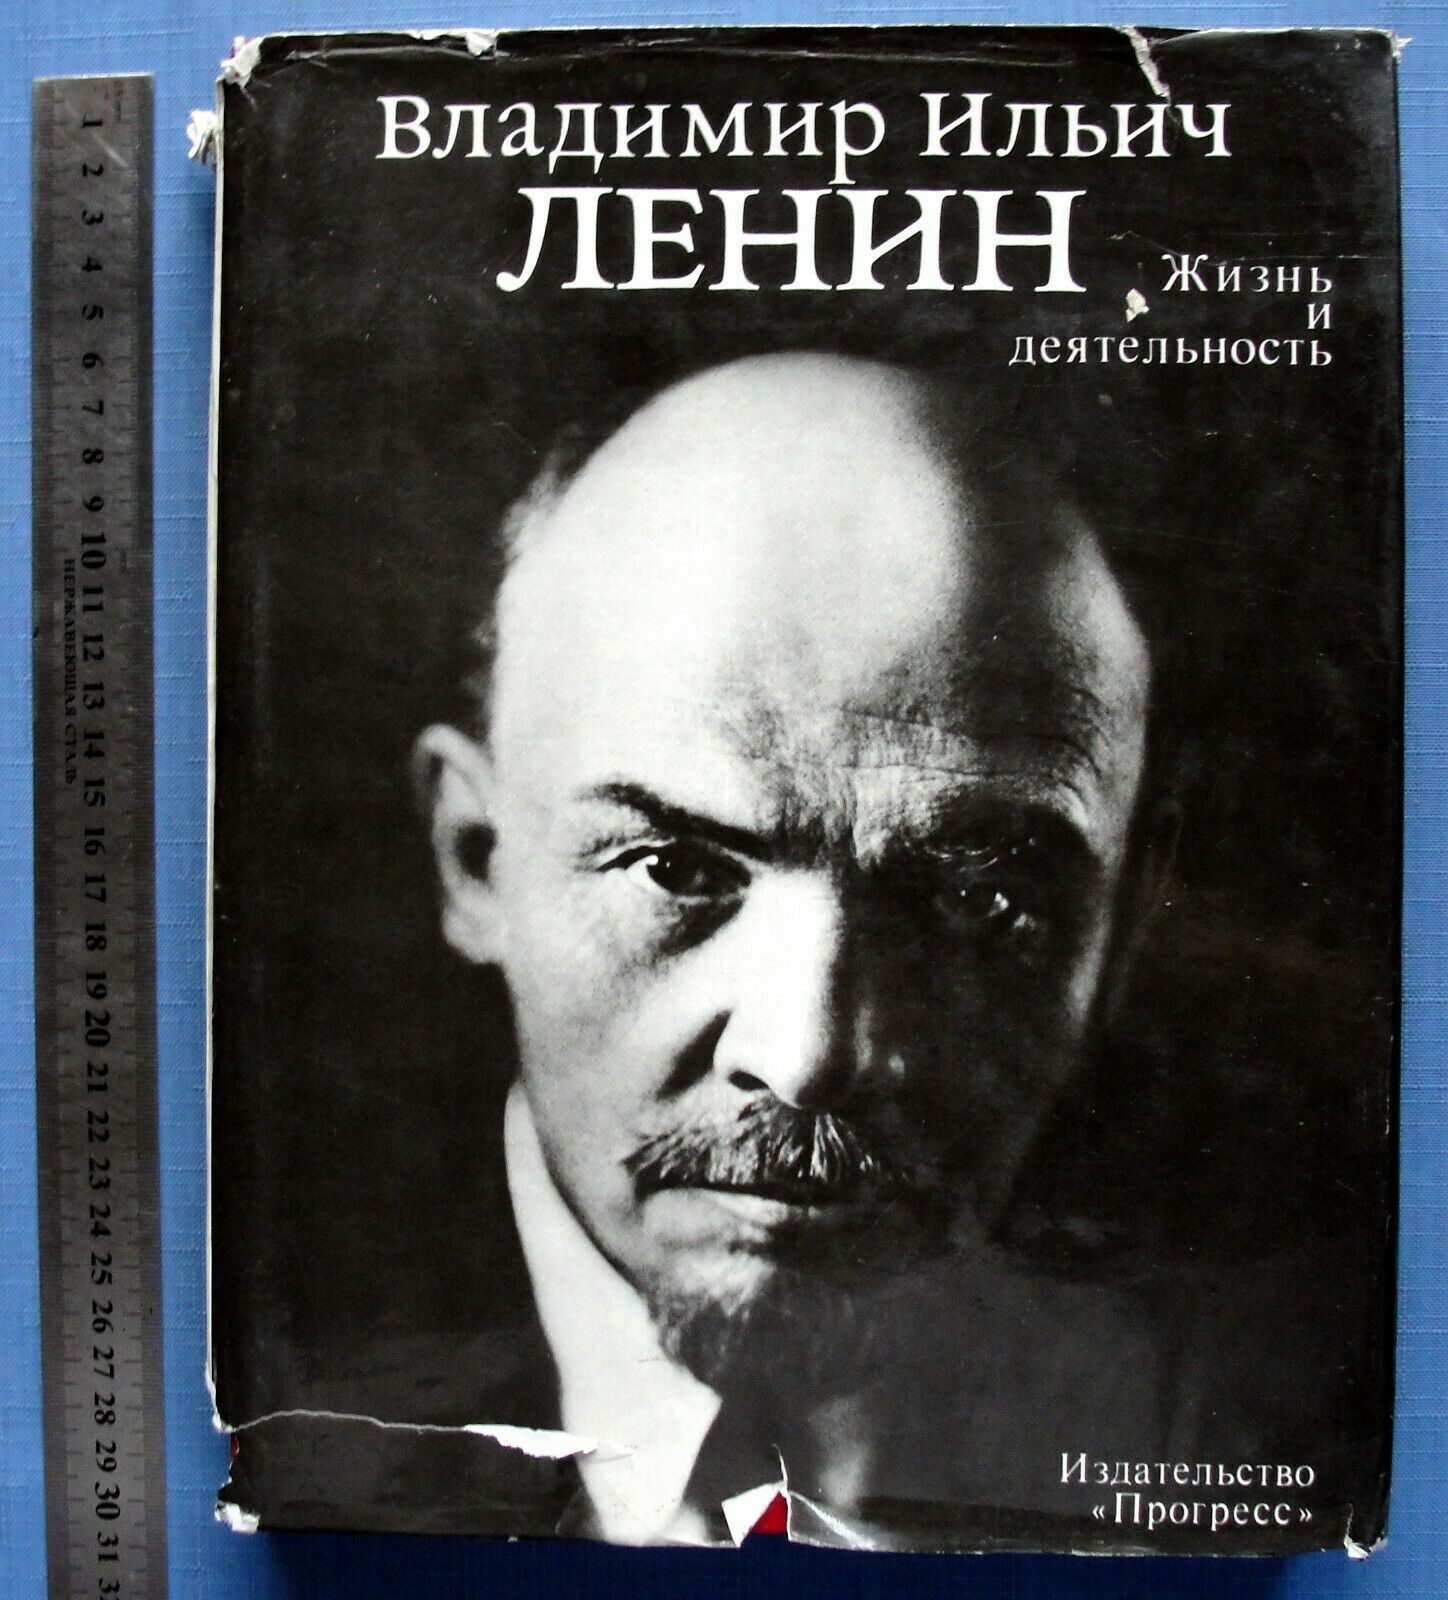 1985 Lenin Life and activities Documents Photos Revolution Russian Soviet Book